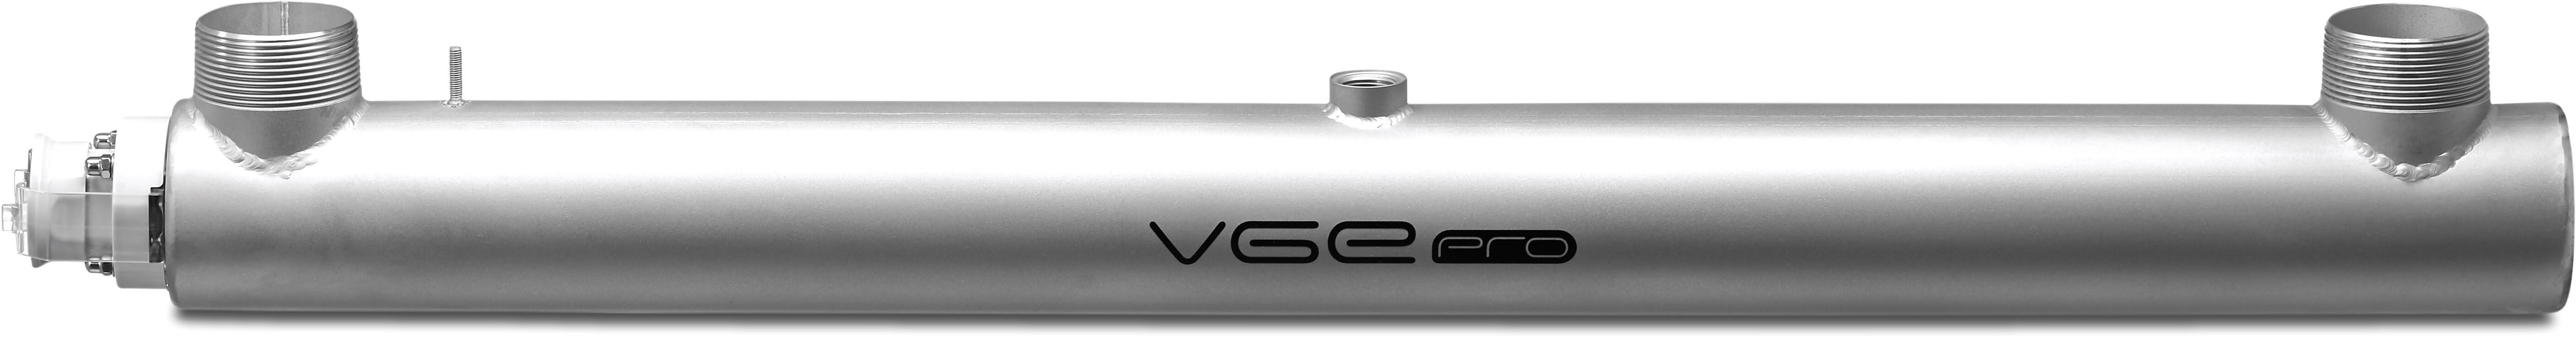 VGE Pro Low UV lampsystem 6bar type Inox 140-76